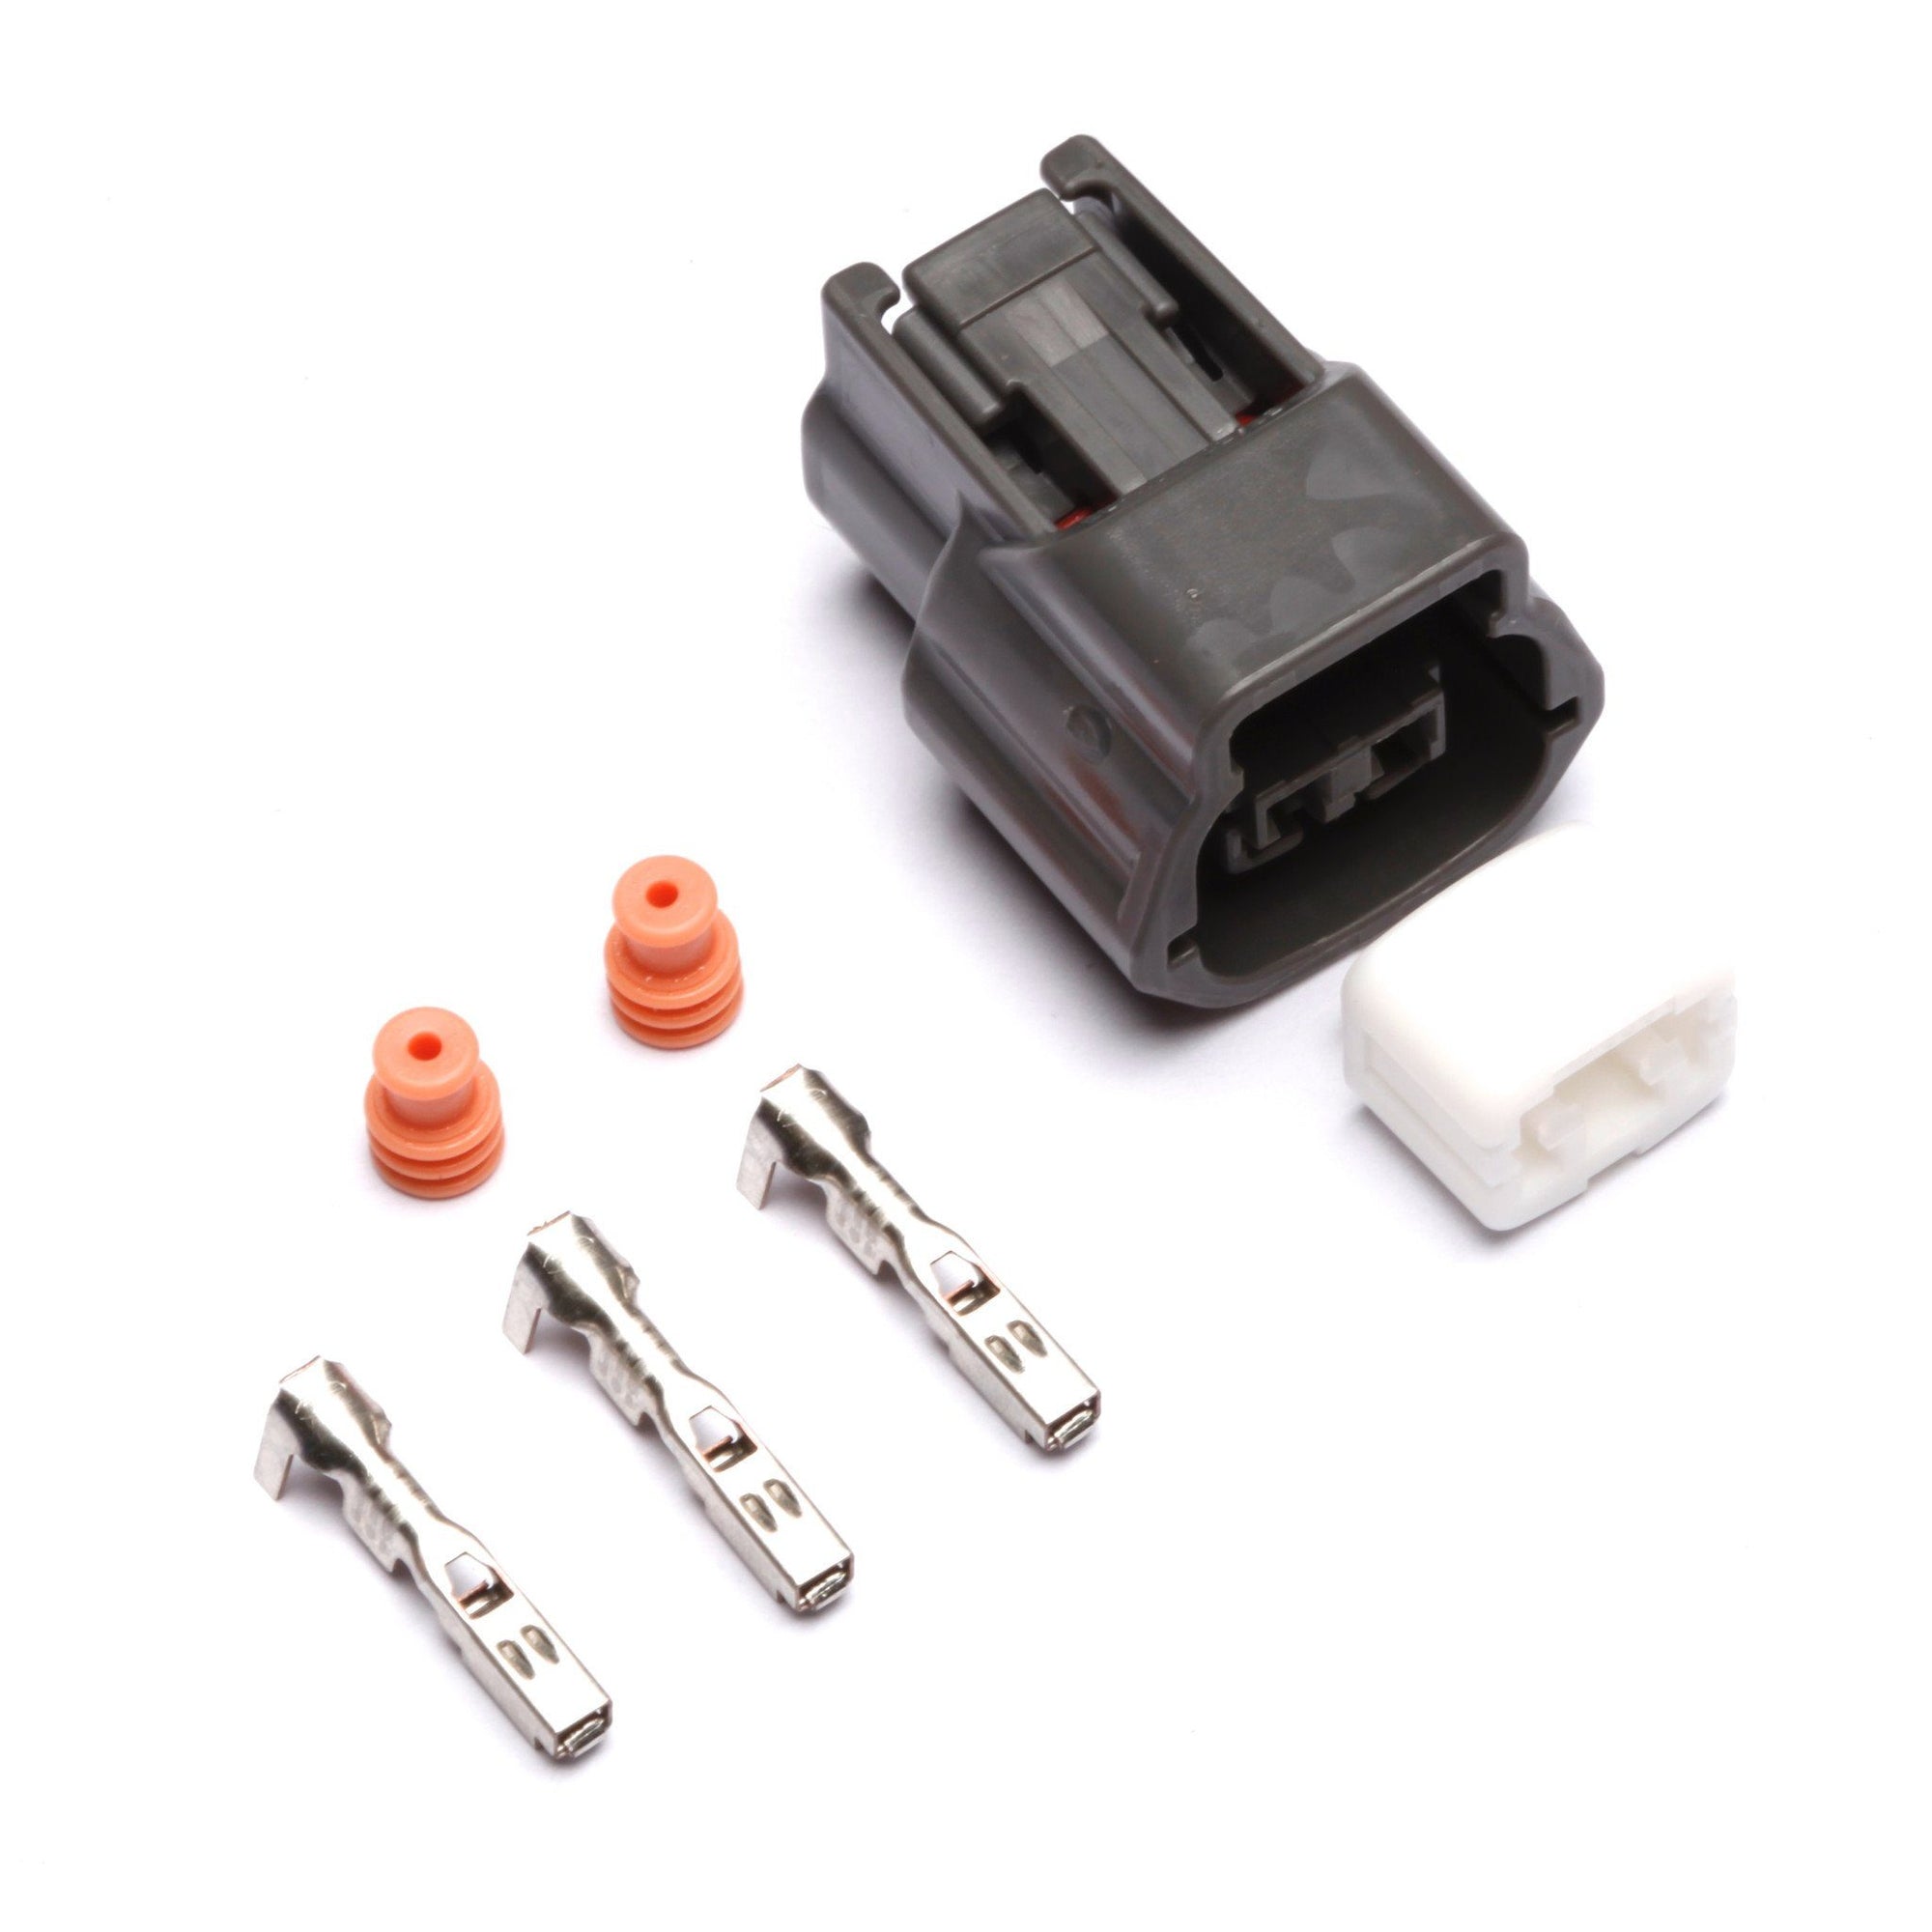 Connectors - Nissan 2-Position Connector Kit (Dark Gray